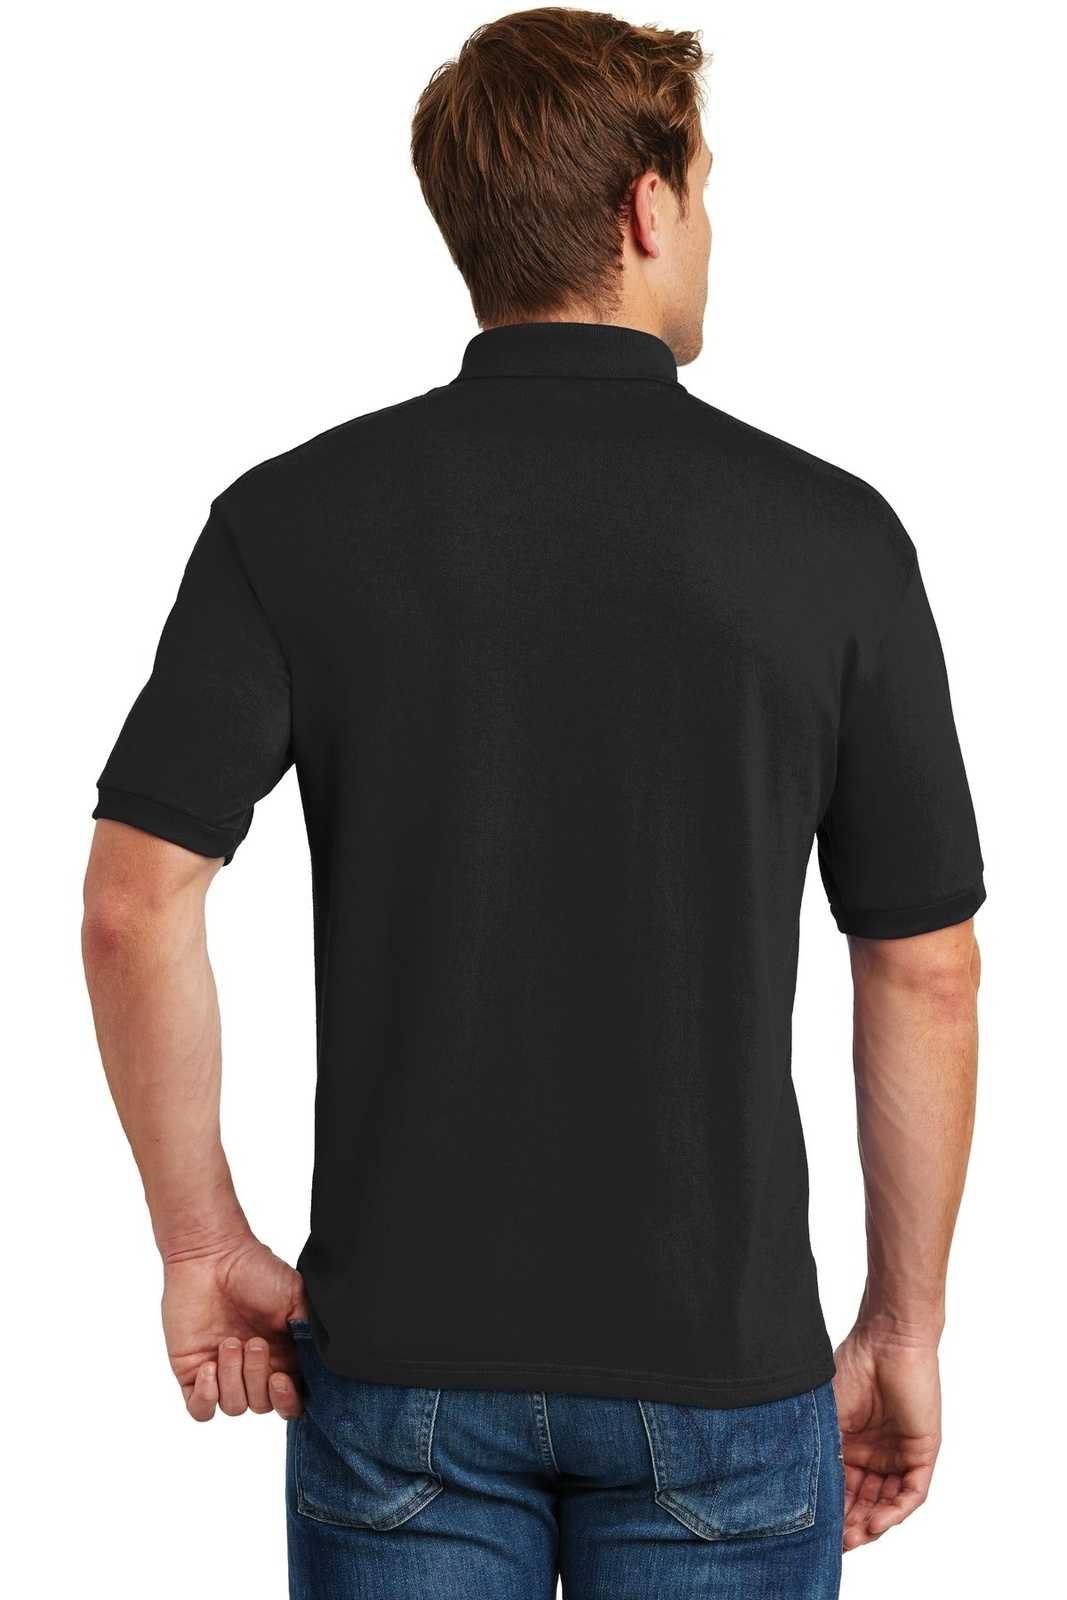 Hanes 054X Ecosmart 5.2-Ounce Jersey Knit Sport Shirt - Black - HIT a Double